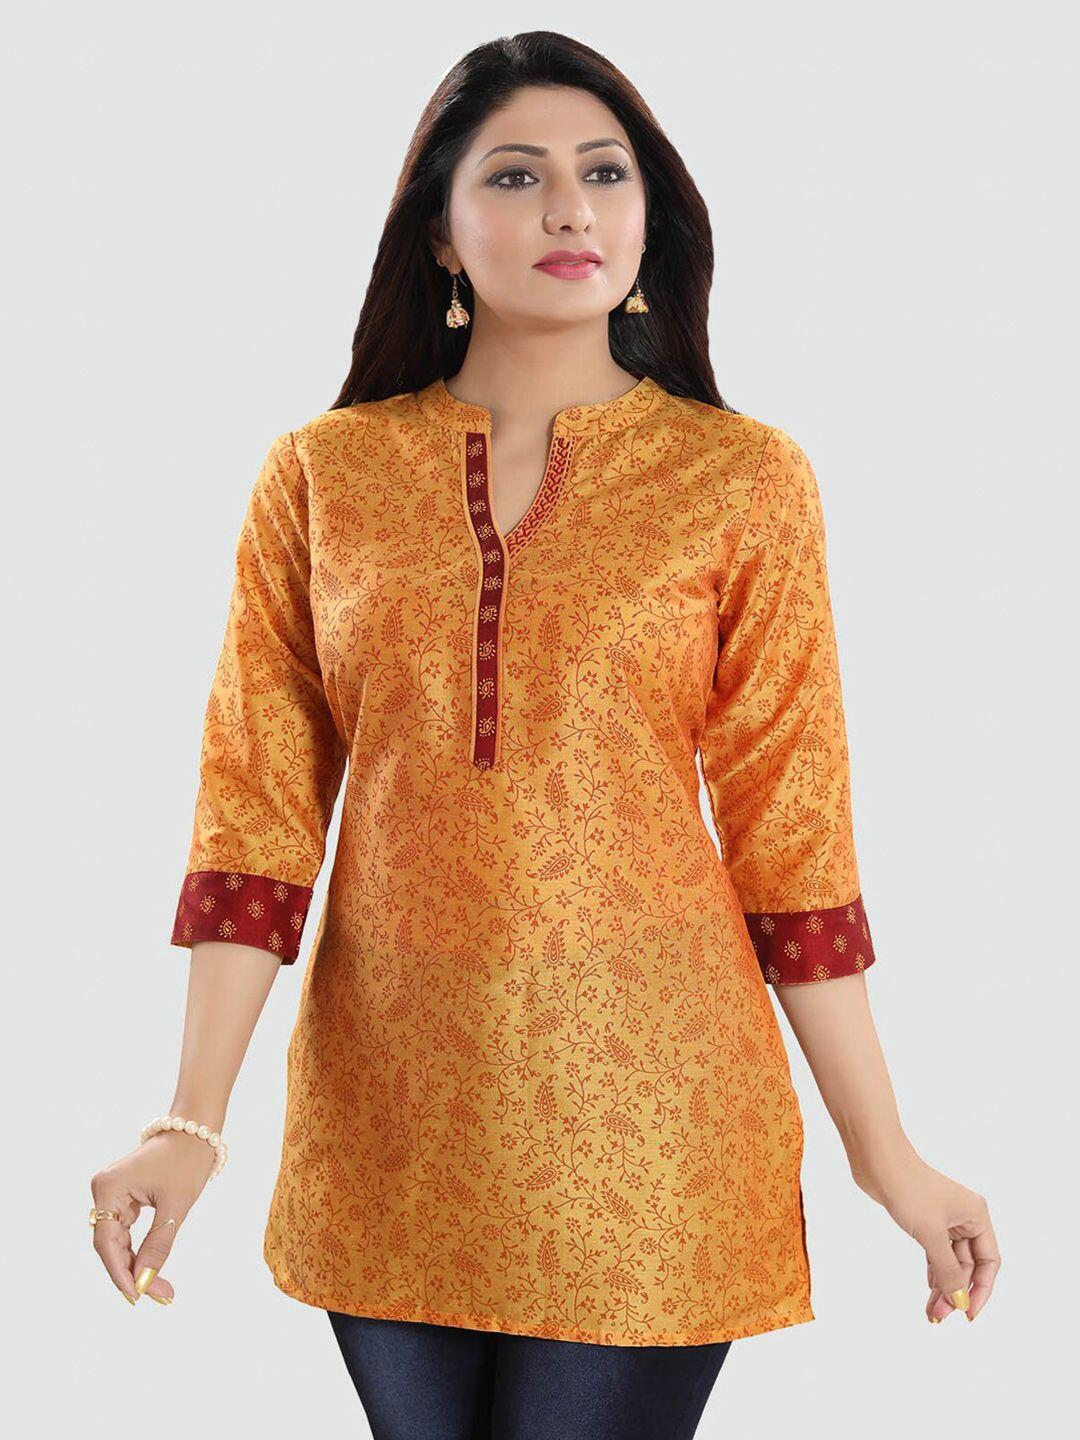 saree-swarg-women-gold-toned-&-red-floral-printed-kurti